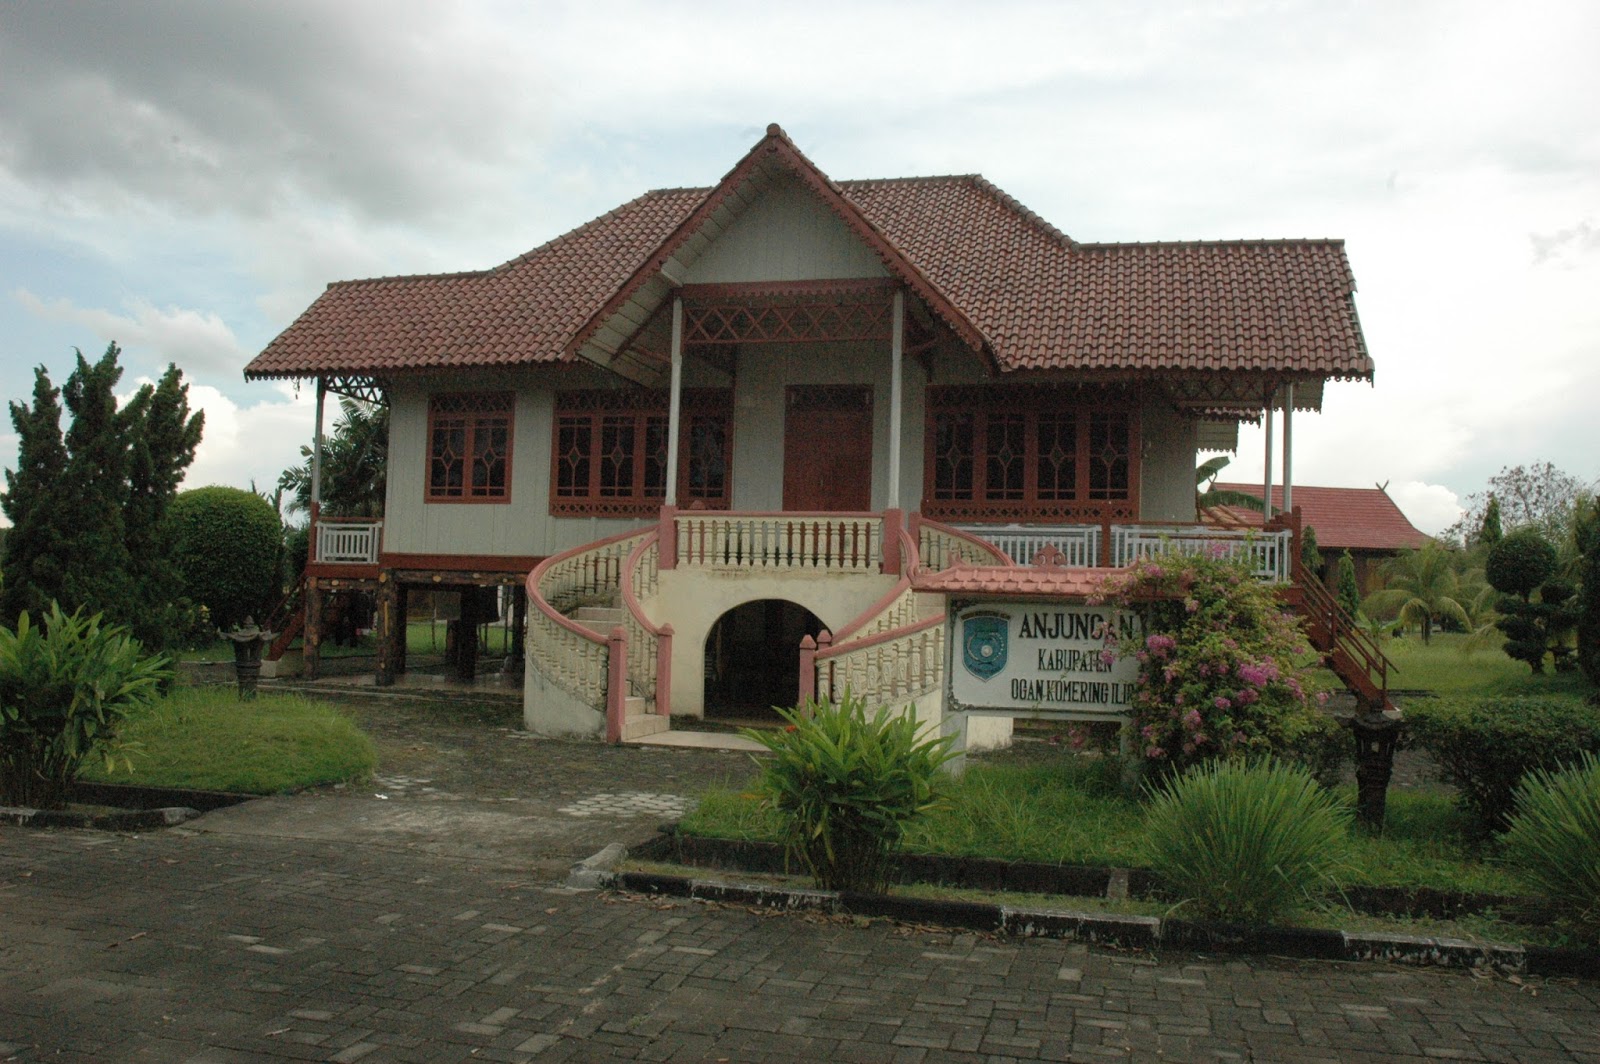 Jual Rumah Kayu I Rumah Panggung Palembang I 081373447722 